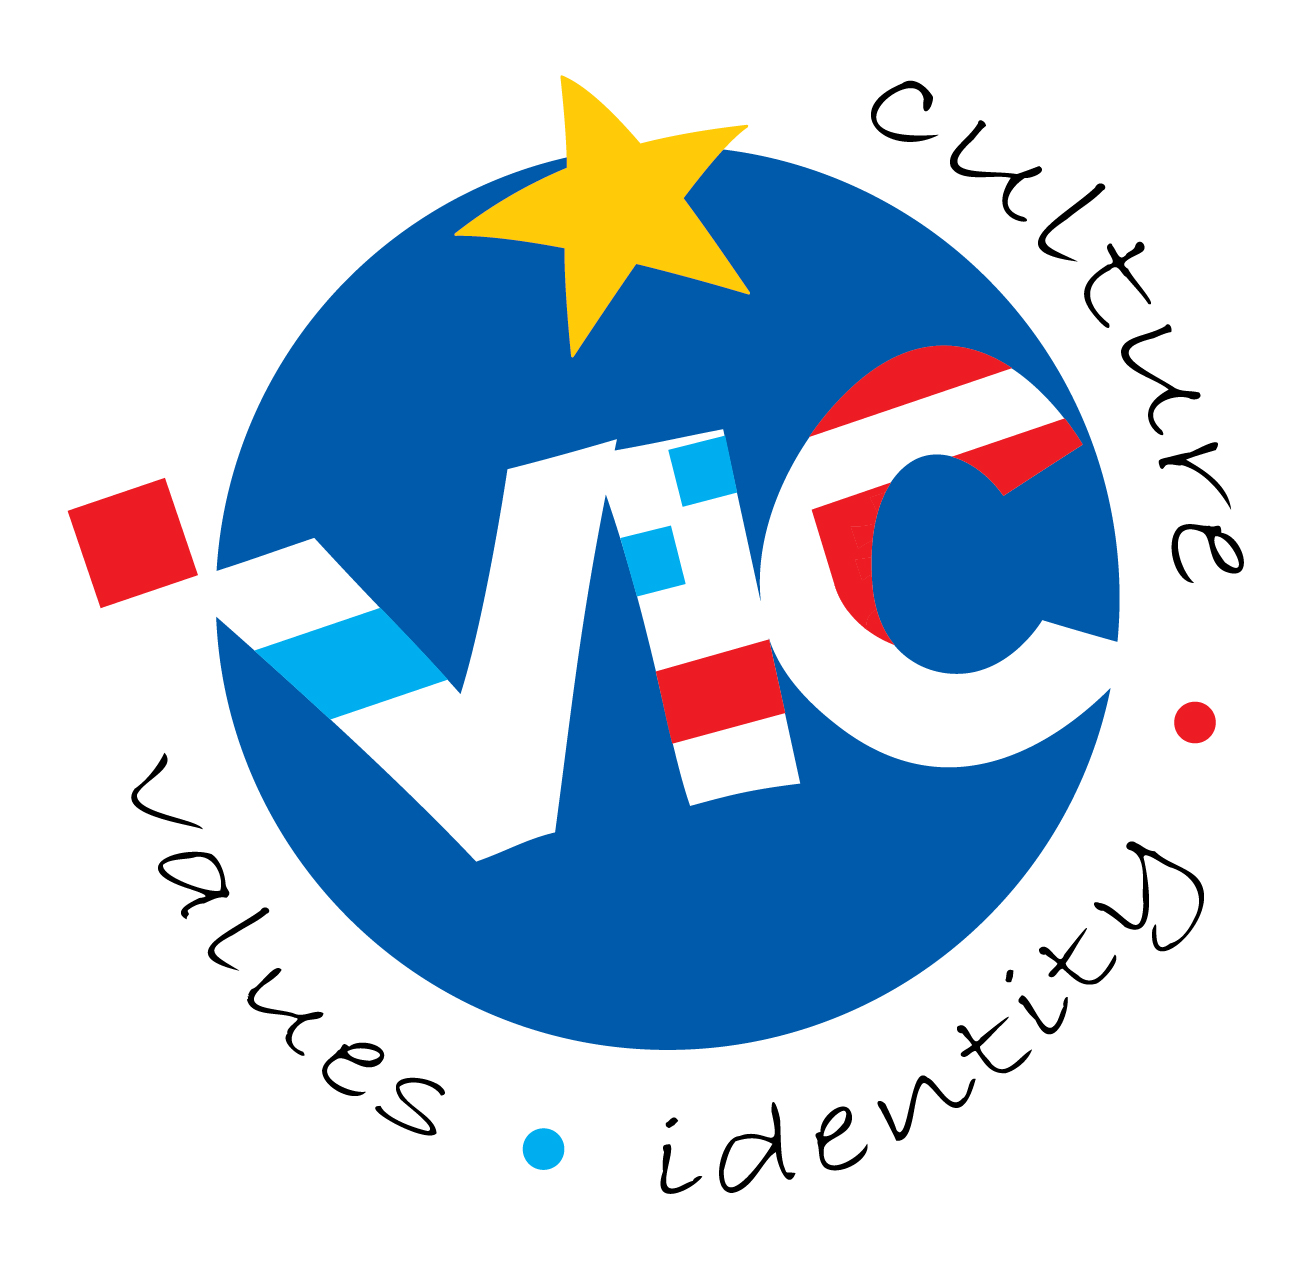 European Values Identity Culture